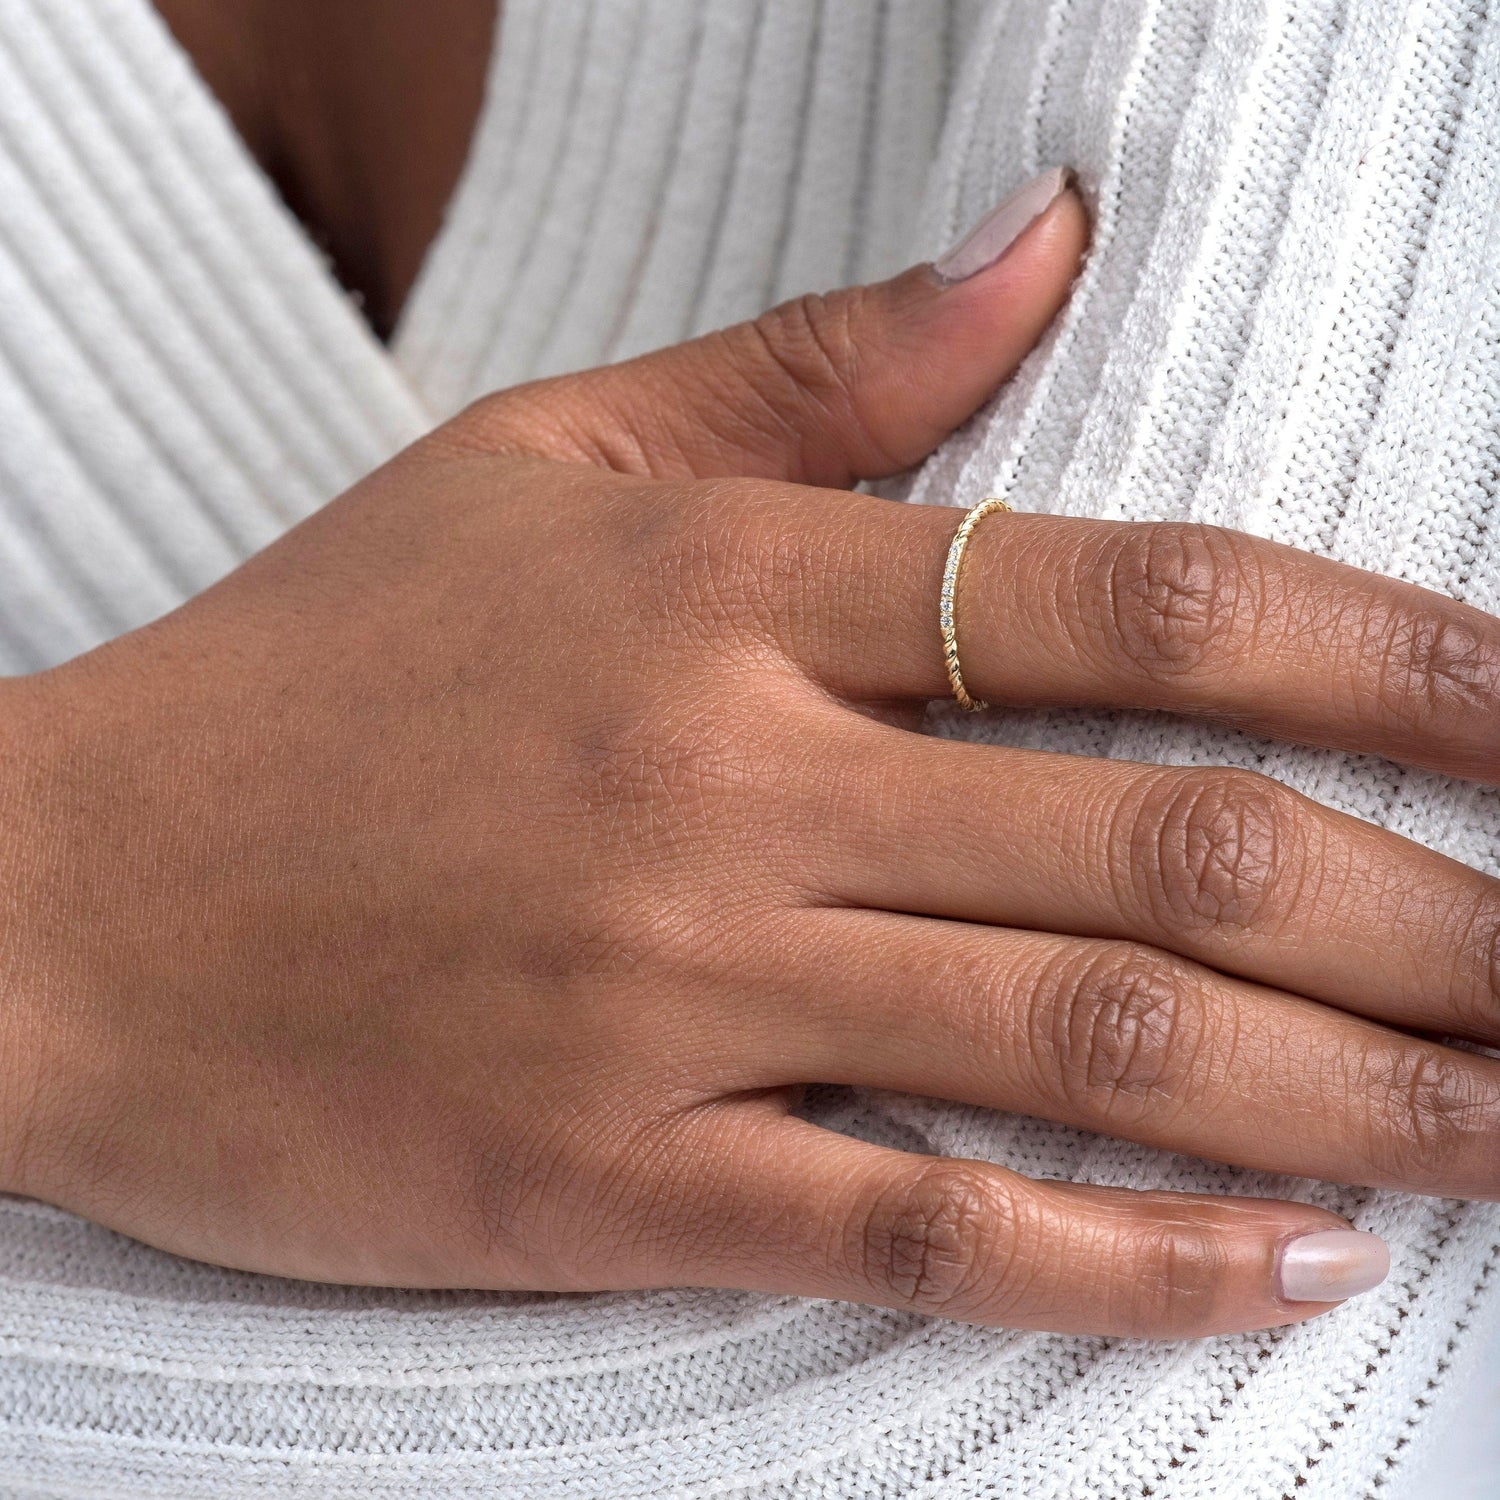 White Gold Dainty Diamond Engagement Ring With 3 Carat Pear Shape Cubiz  Zirconia Center Stone